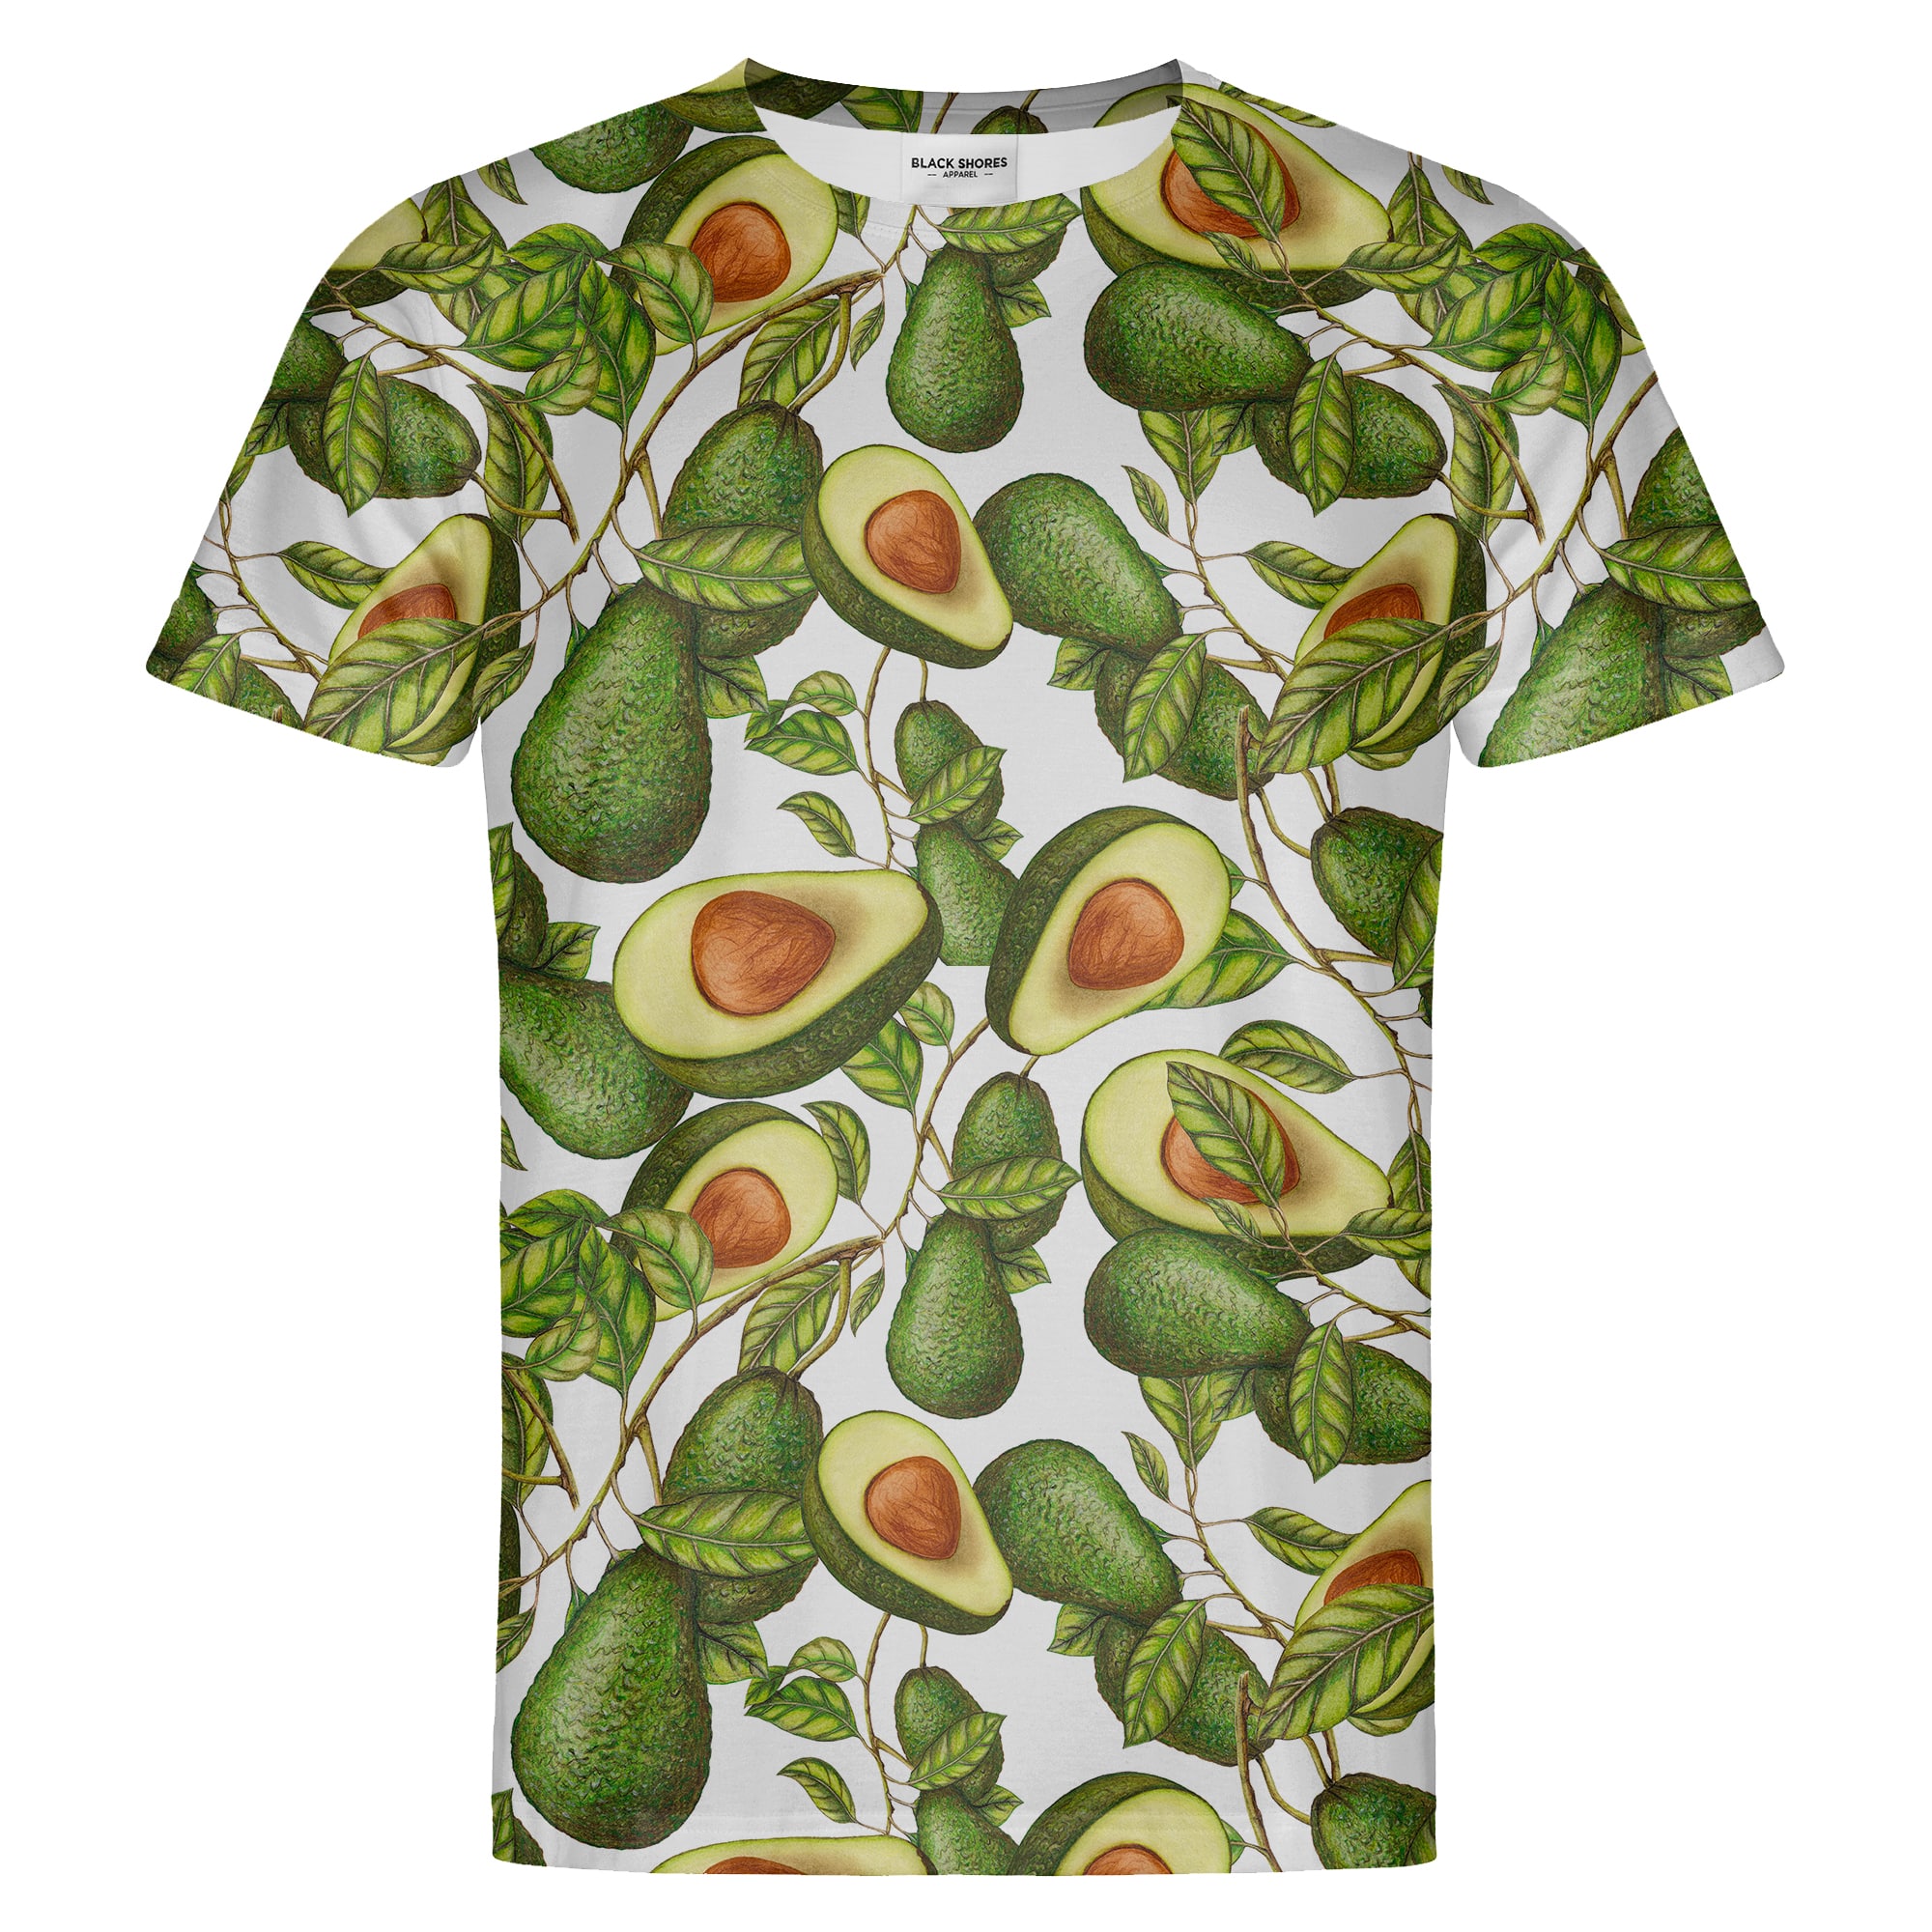 Avocado T-shirt – Black Shores - XL